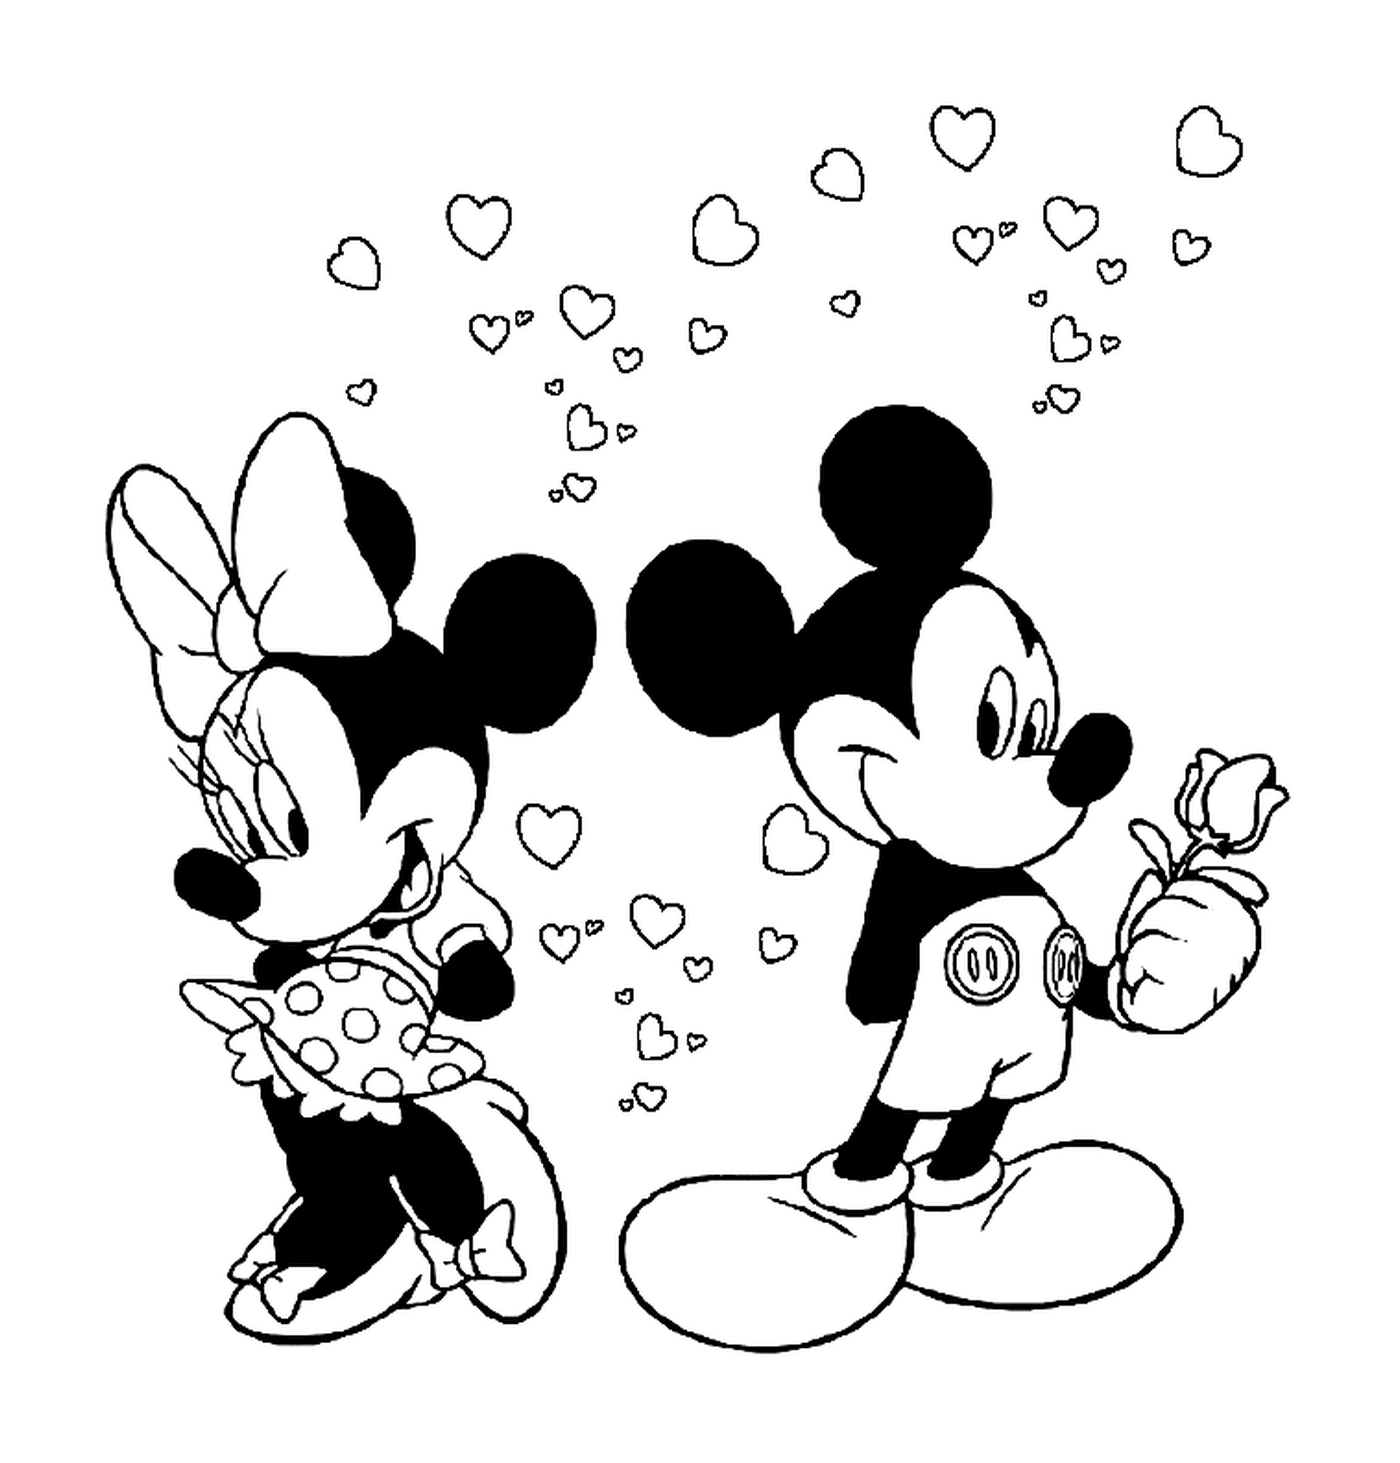  Mickey Mouse está apaixonado por Minnie Mouse 